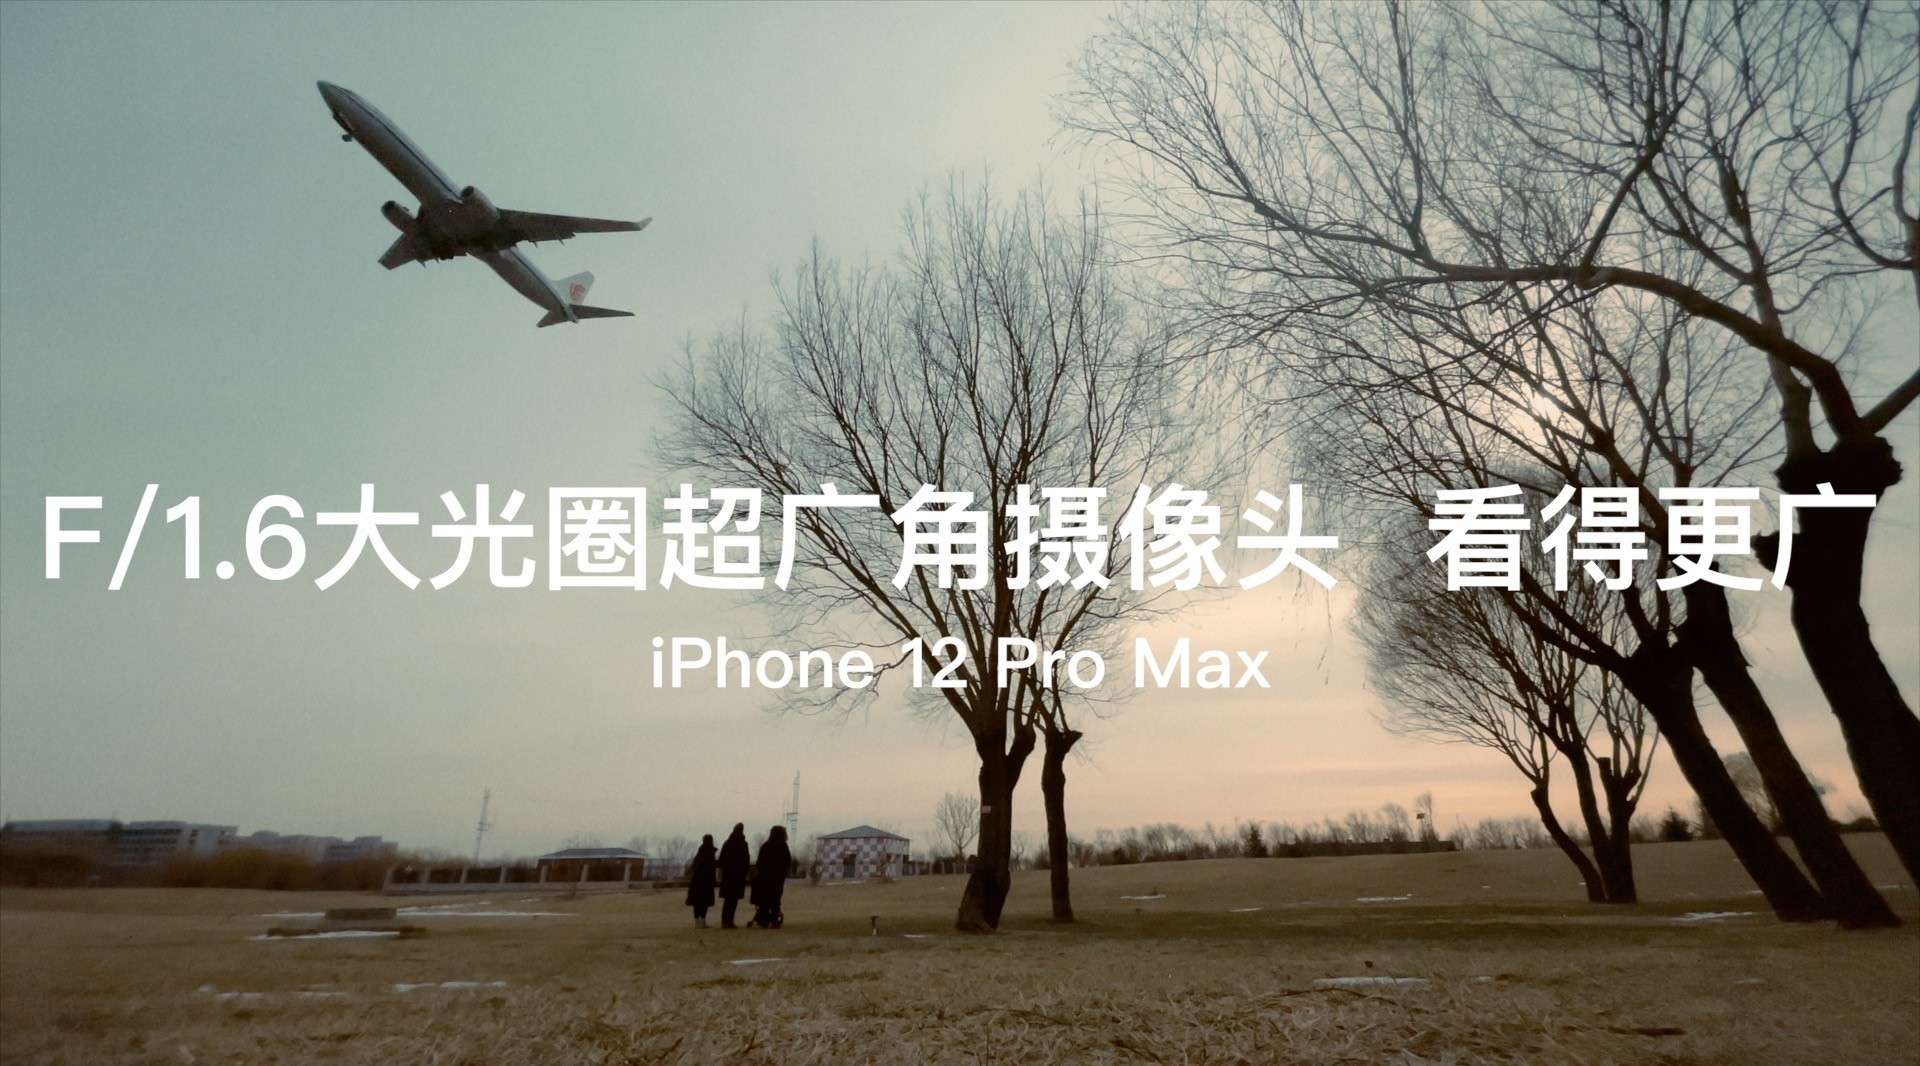 iPhone 12 Pro Max 创意视频—换个角度看世界